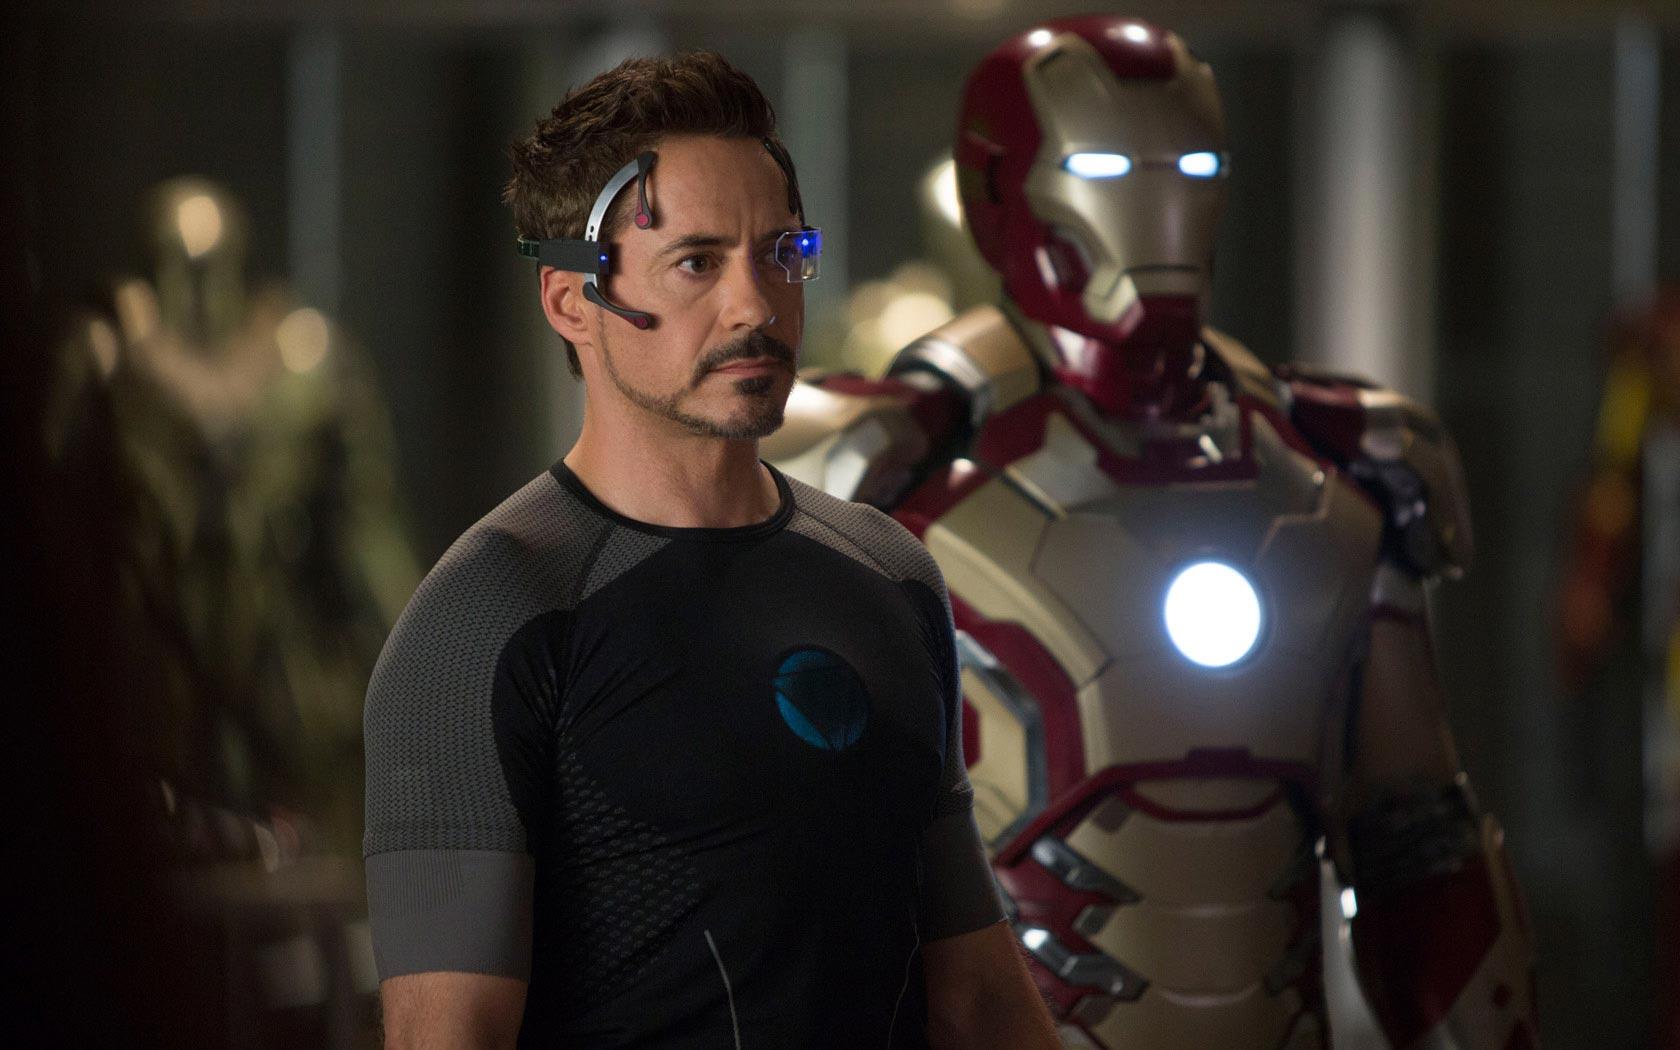 Iron Man 3 Tony Stark HD Wallpaper